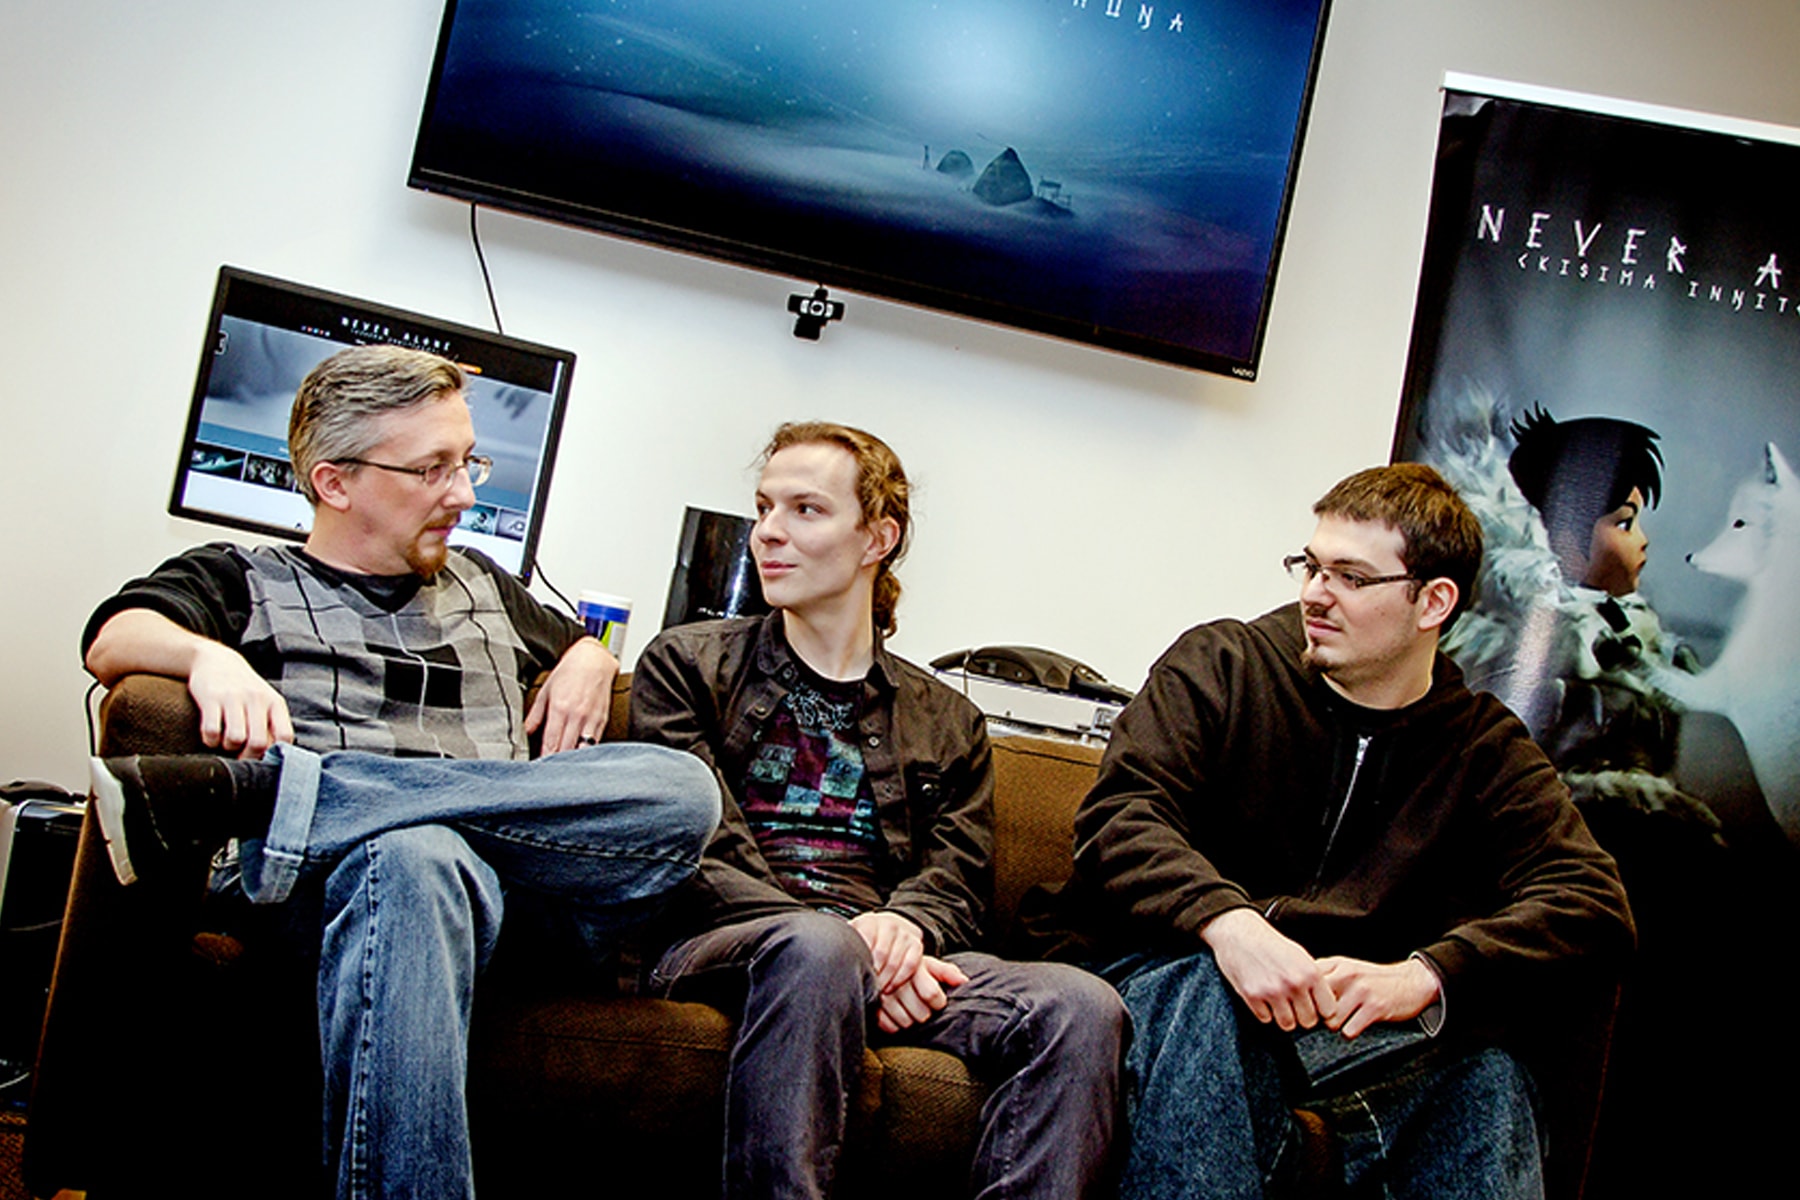 DigiPen alumni Matt Swanson, Alexei Gill, and Vincent Leone sitting on a couch in the E-Line Media office